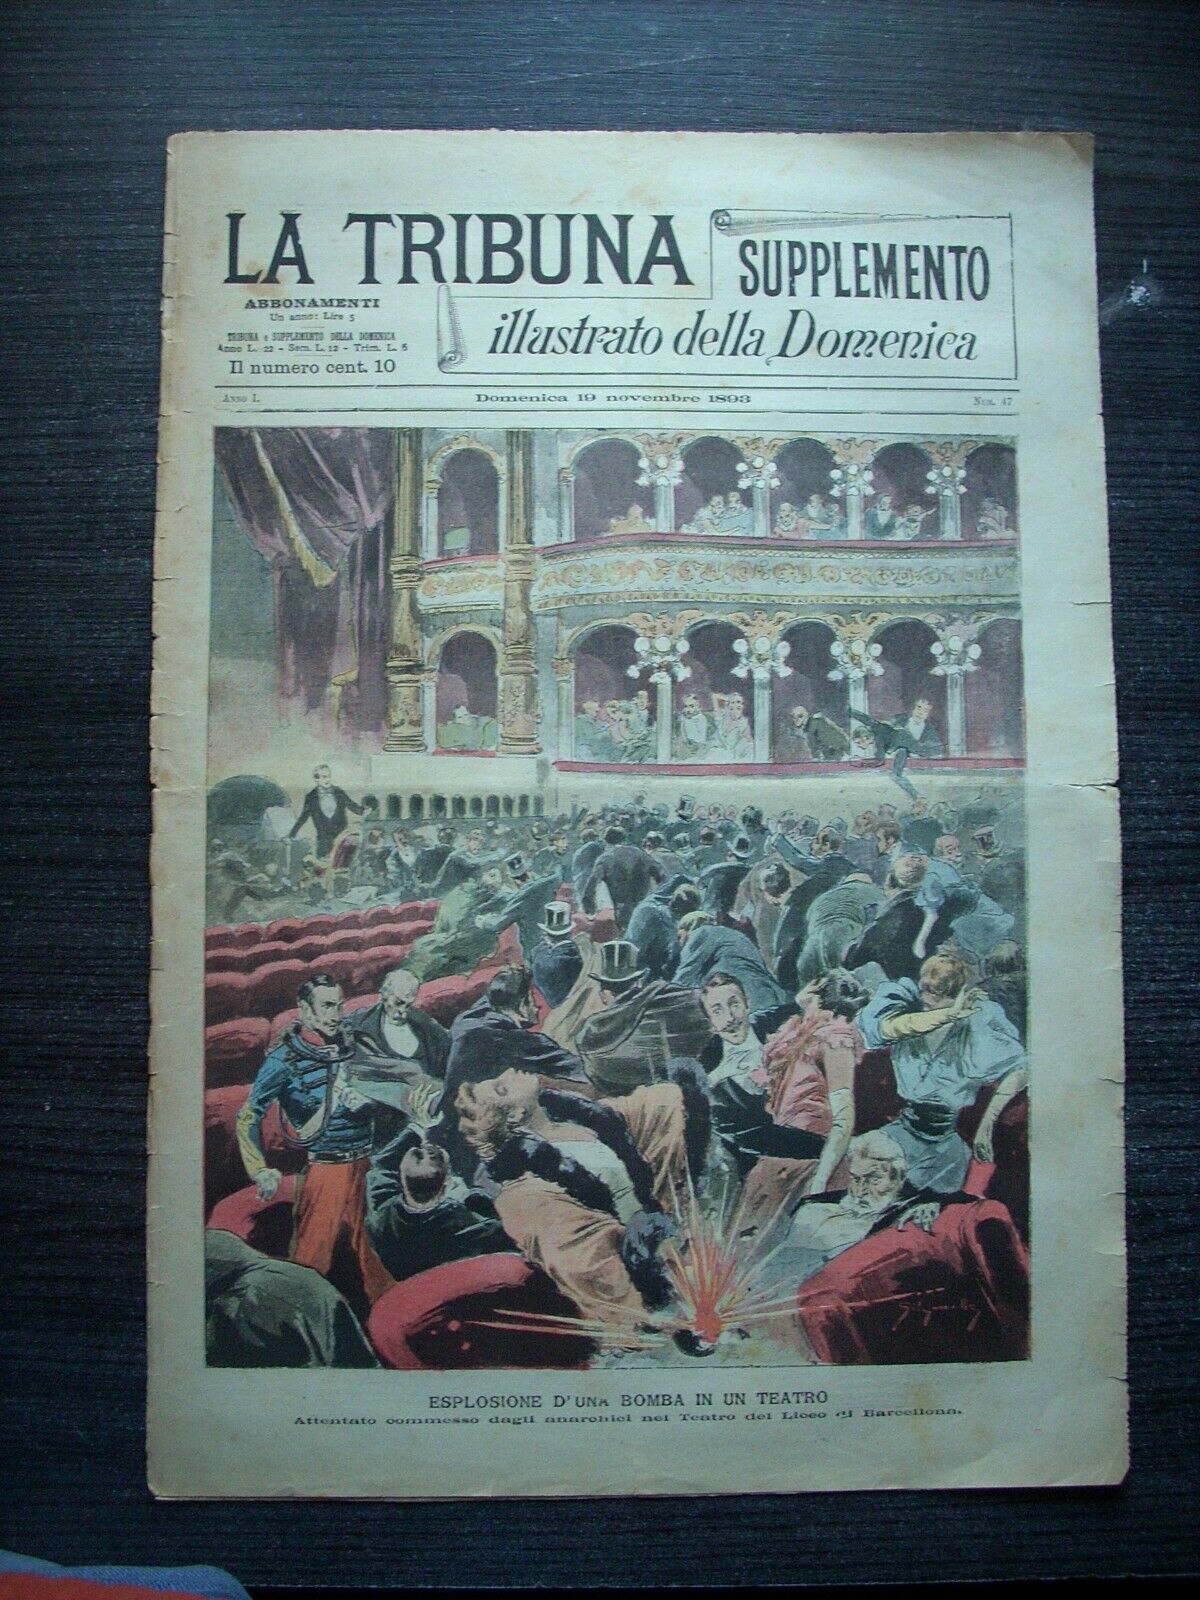 Barcelona bomb attack on El Liceu Theatre 1893 - Kharkiv Ukr lioness kills tamer